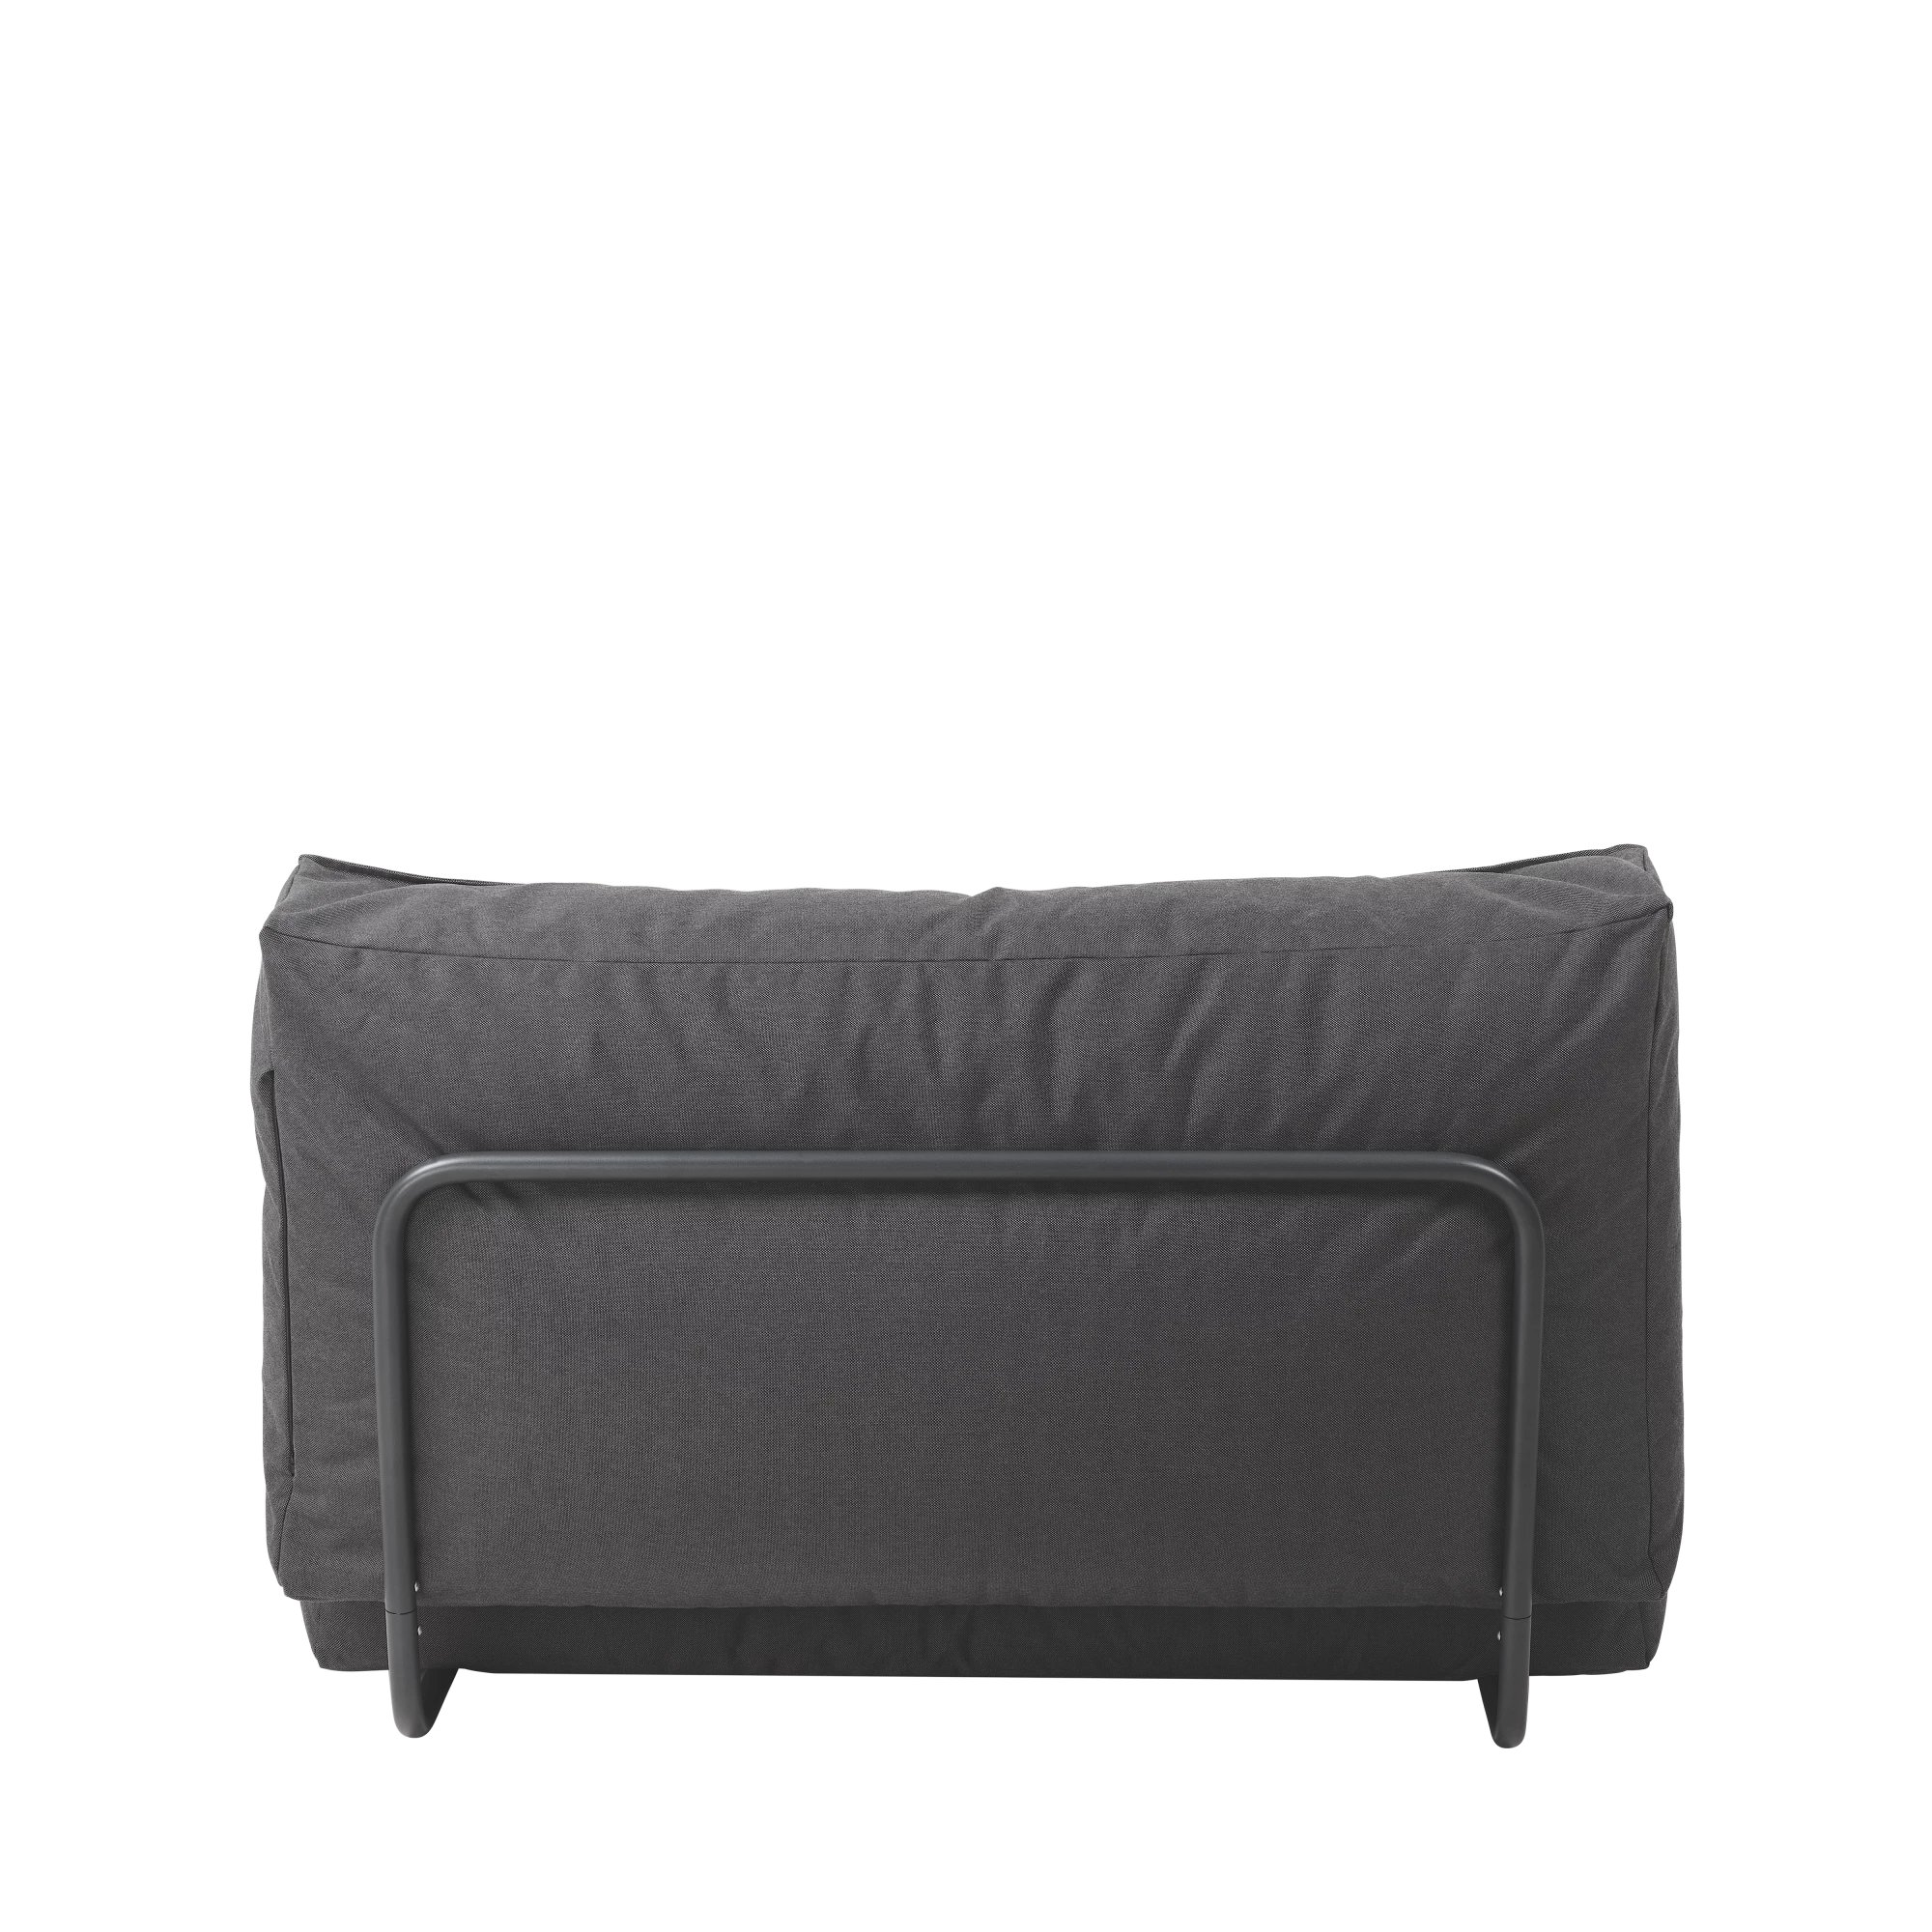 BLOMUS // STAY - OUTDOOR BED | 120 x 190 cm | COAL